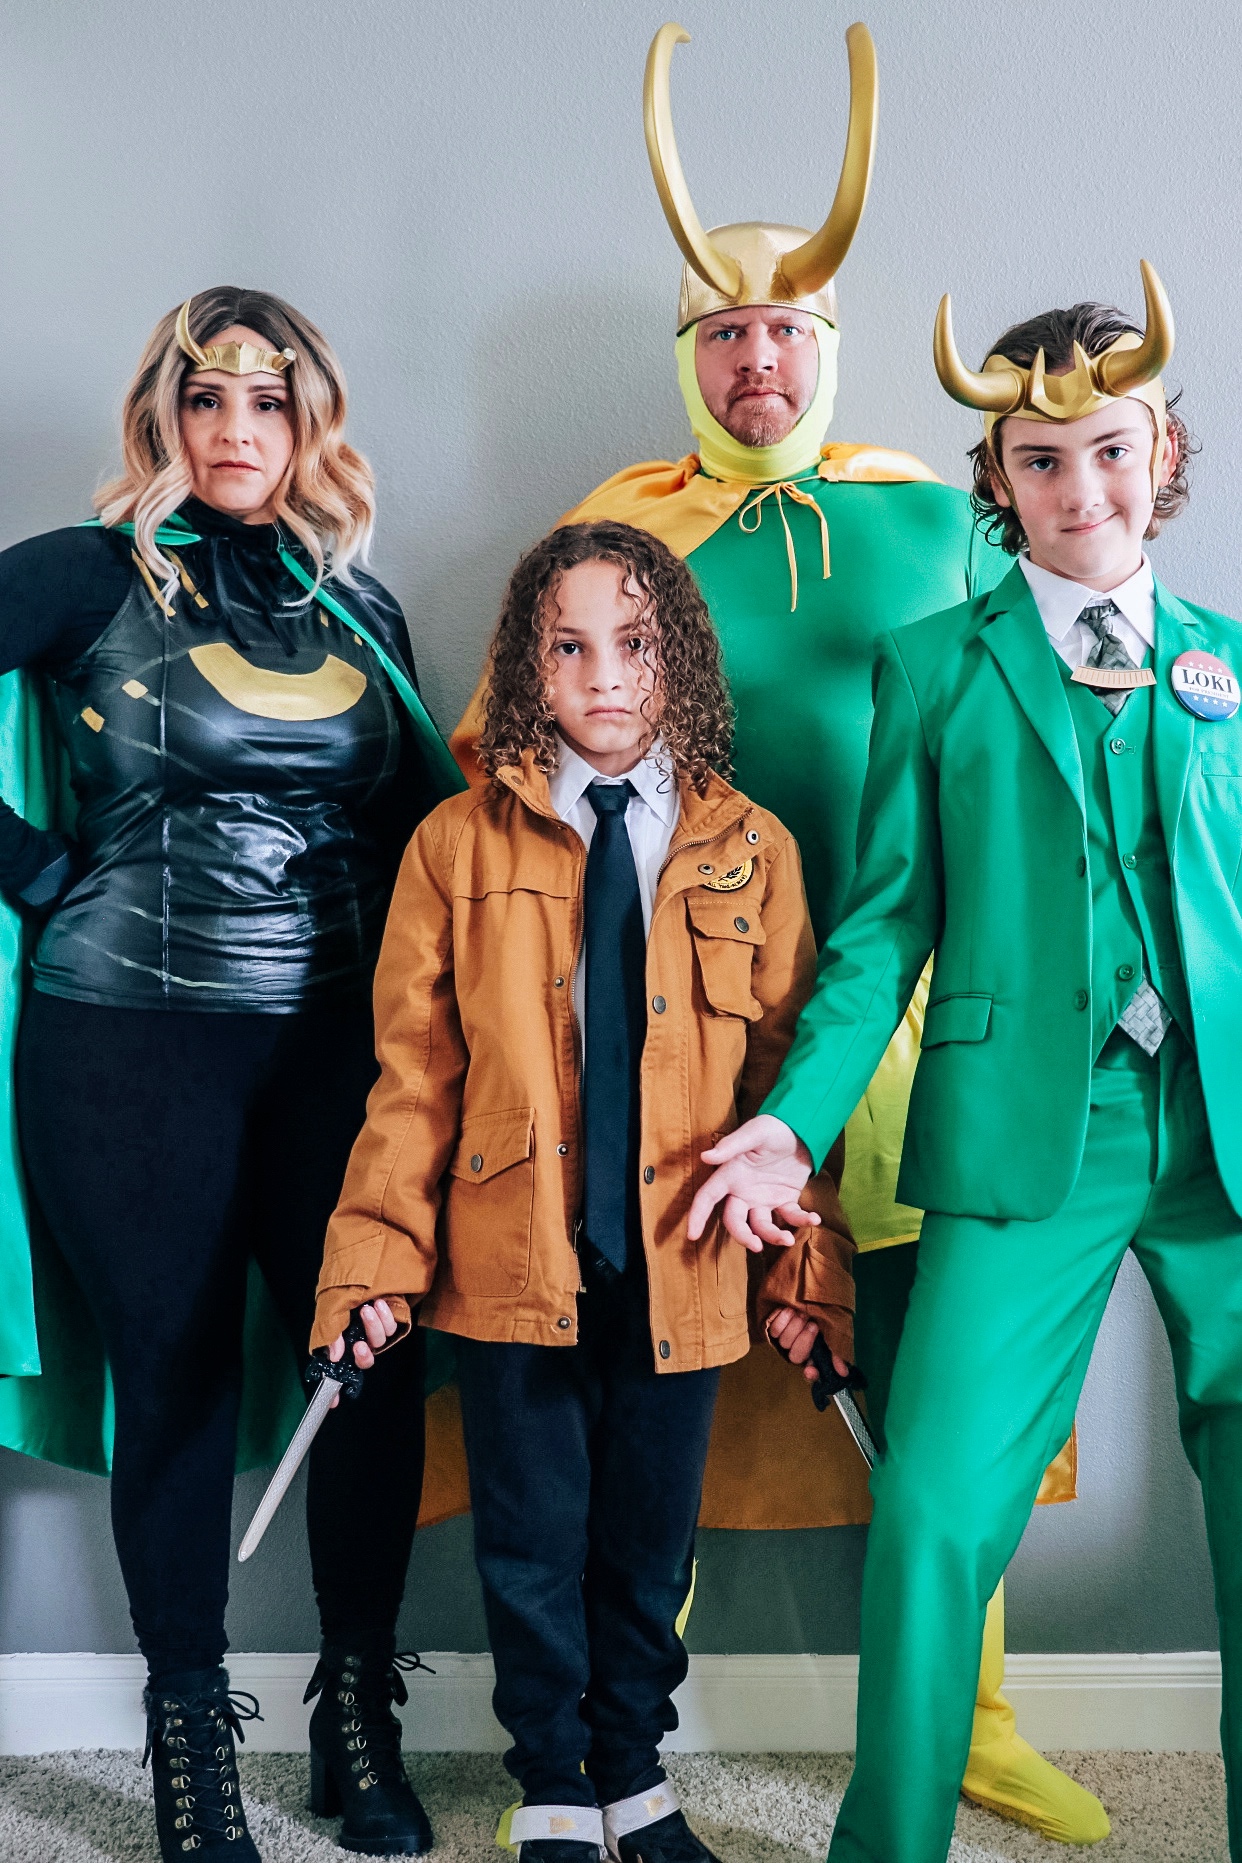 Family DIY Loki costume ideas for Halloween